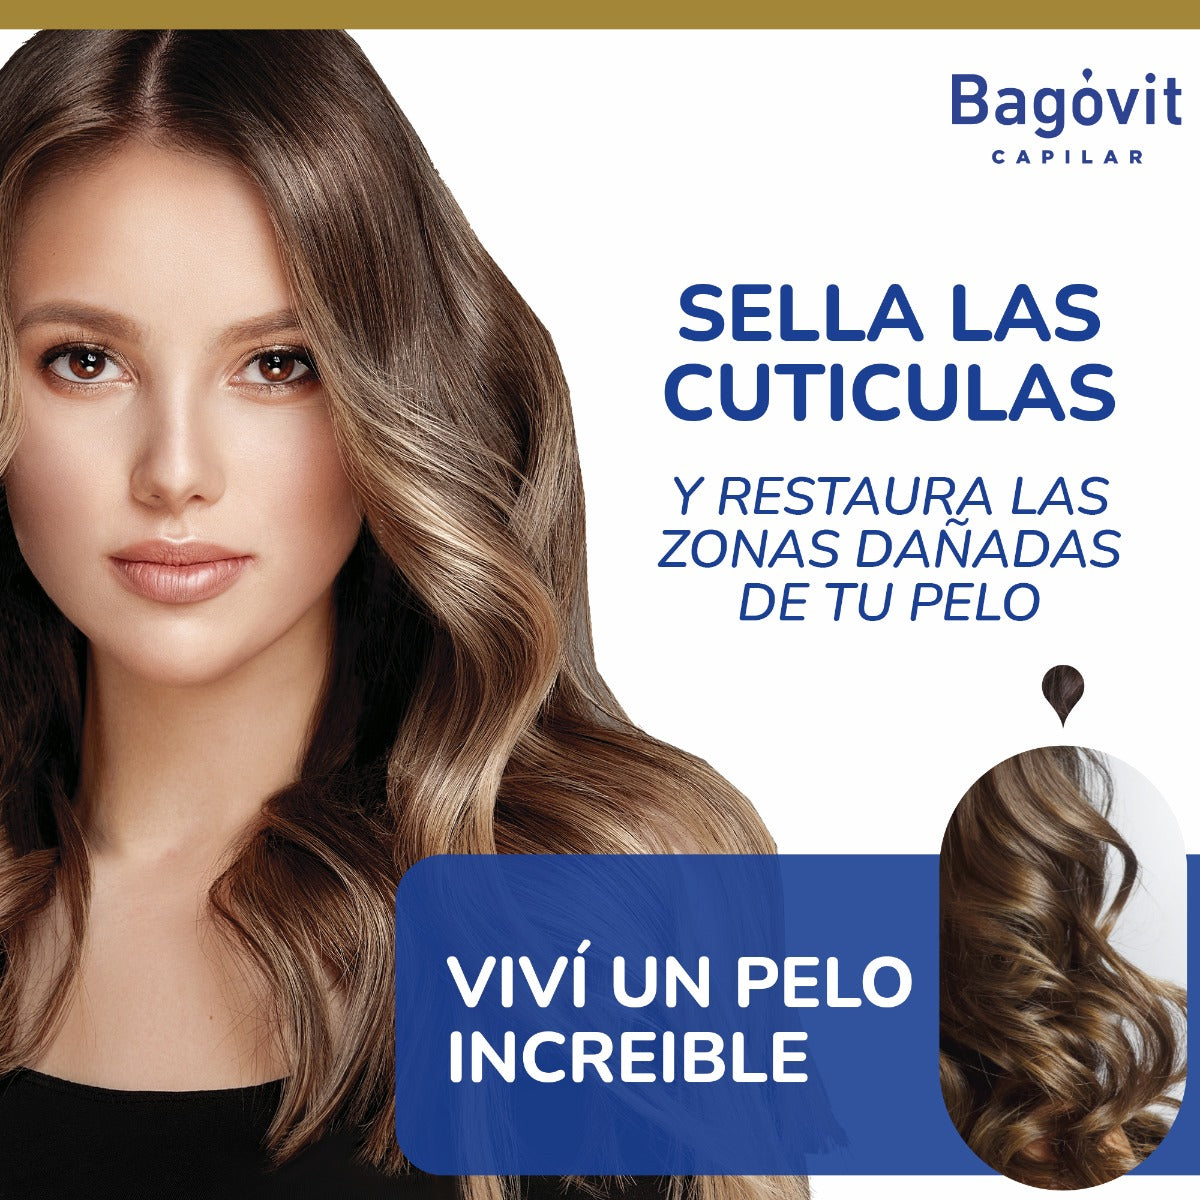 Bagovit Shampoo (350ml / 11.83fl Oz), Experience Deep Nutrition for Your Hair